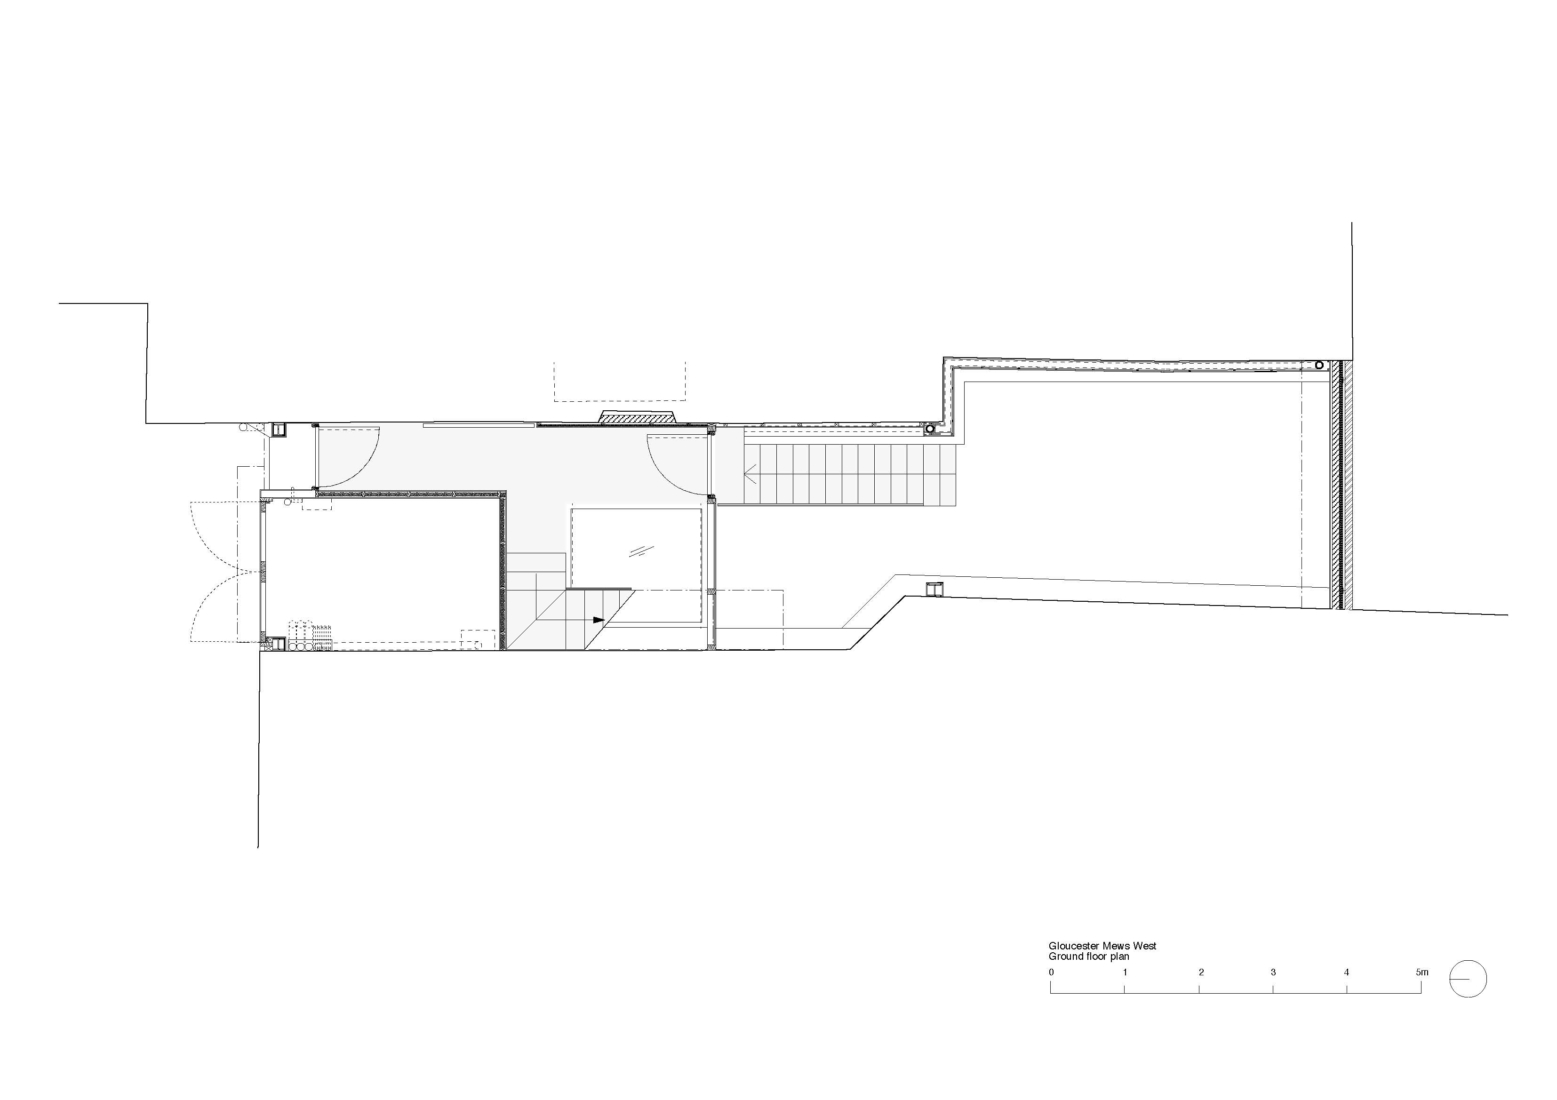 Gloucester Mews West ground floor plan